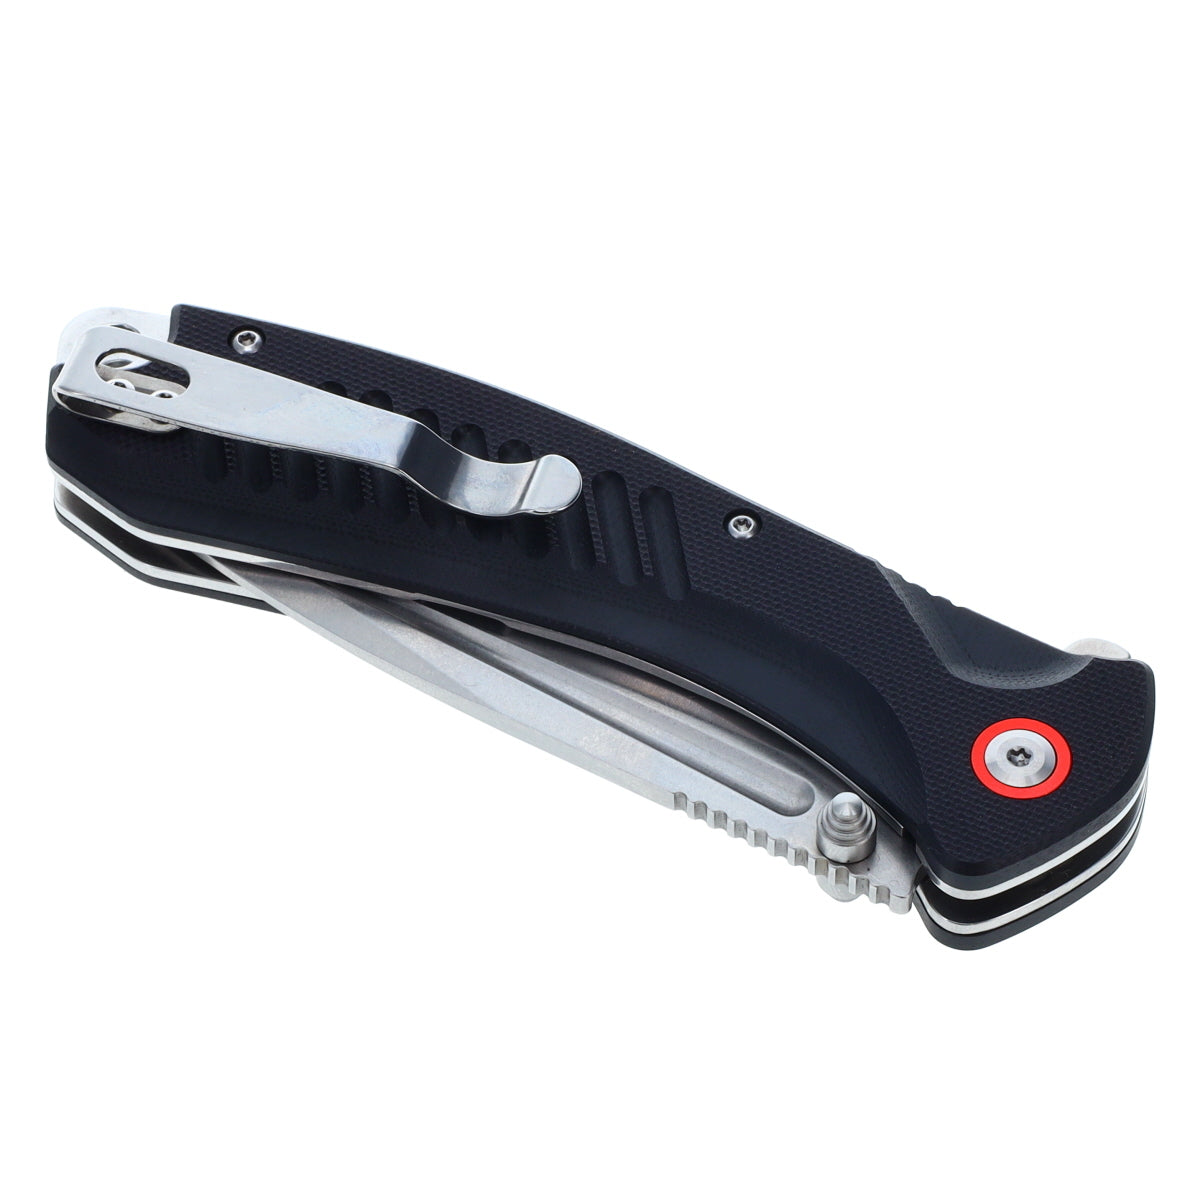 Cummins Serrated Edge Folding Pocket Knife 4-Inch Tanto Blade CMN4724 w Liner Lock  Lightweight Utility Knife - Black